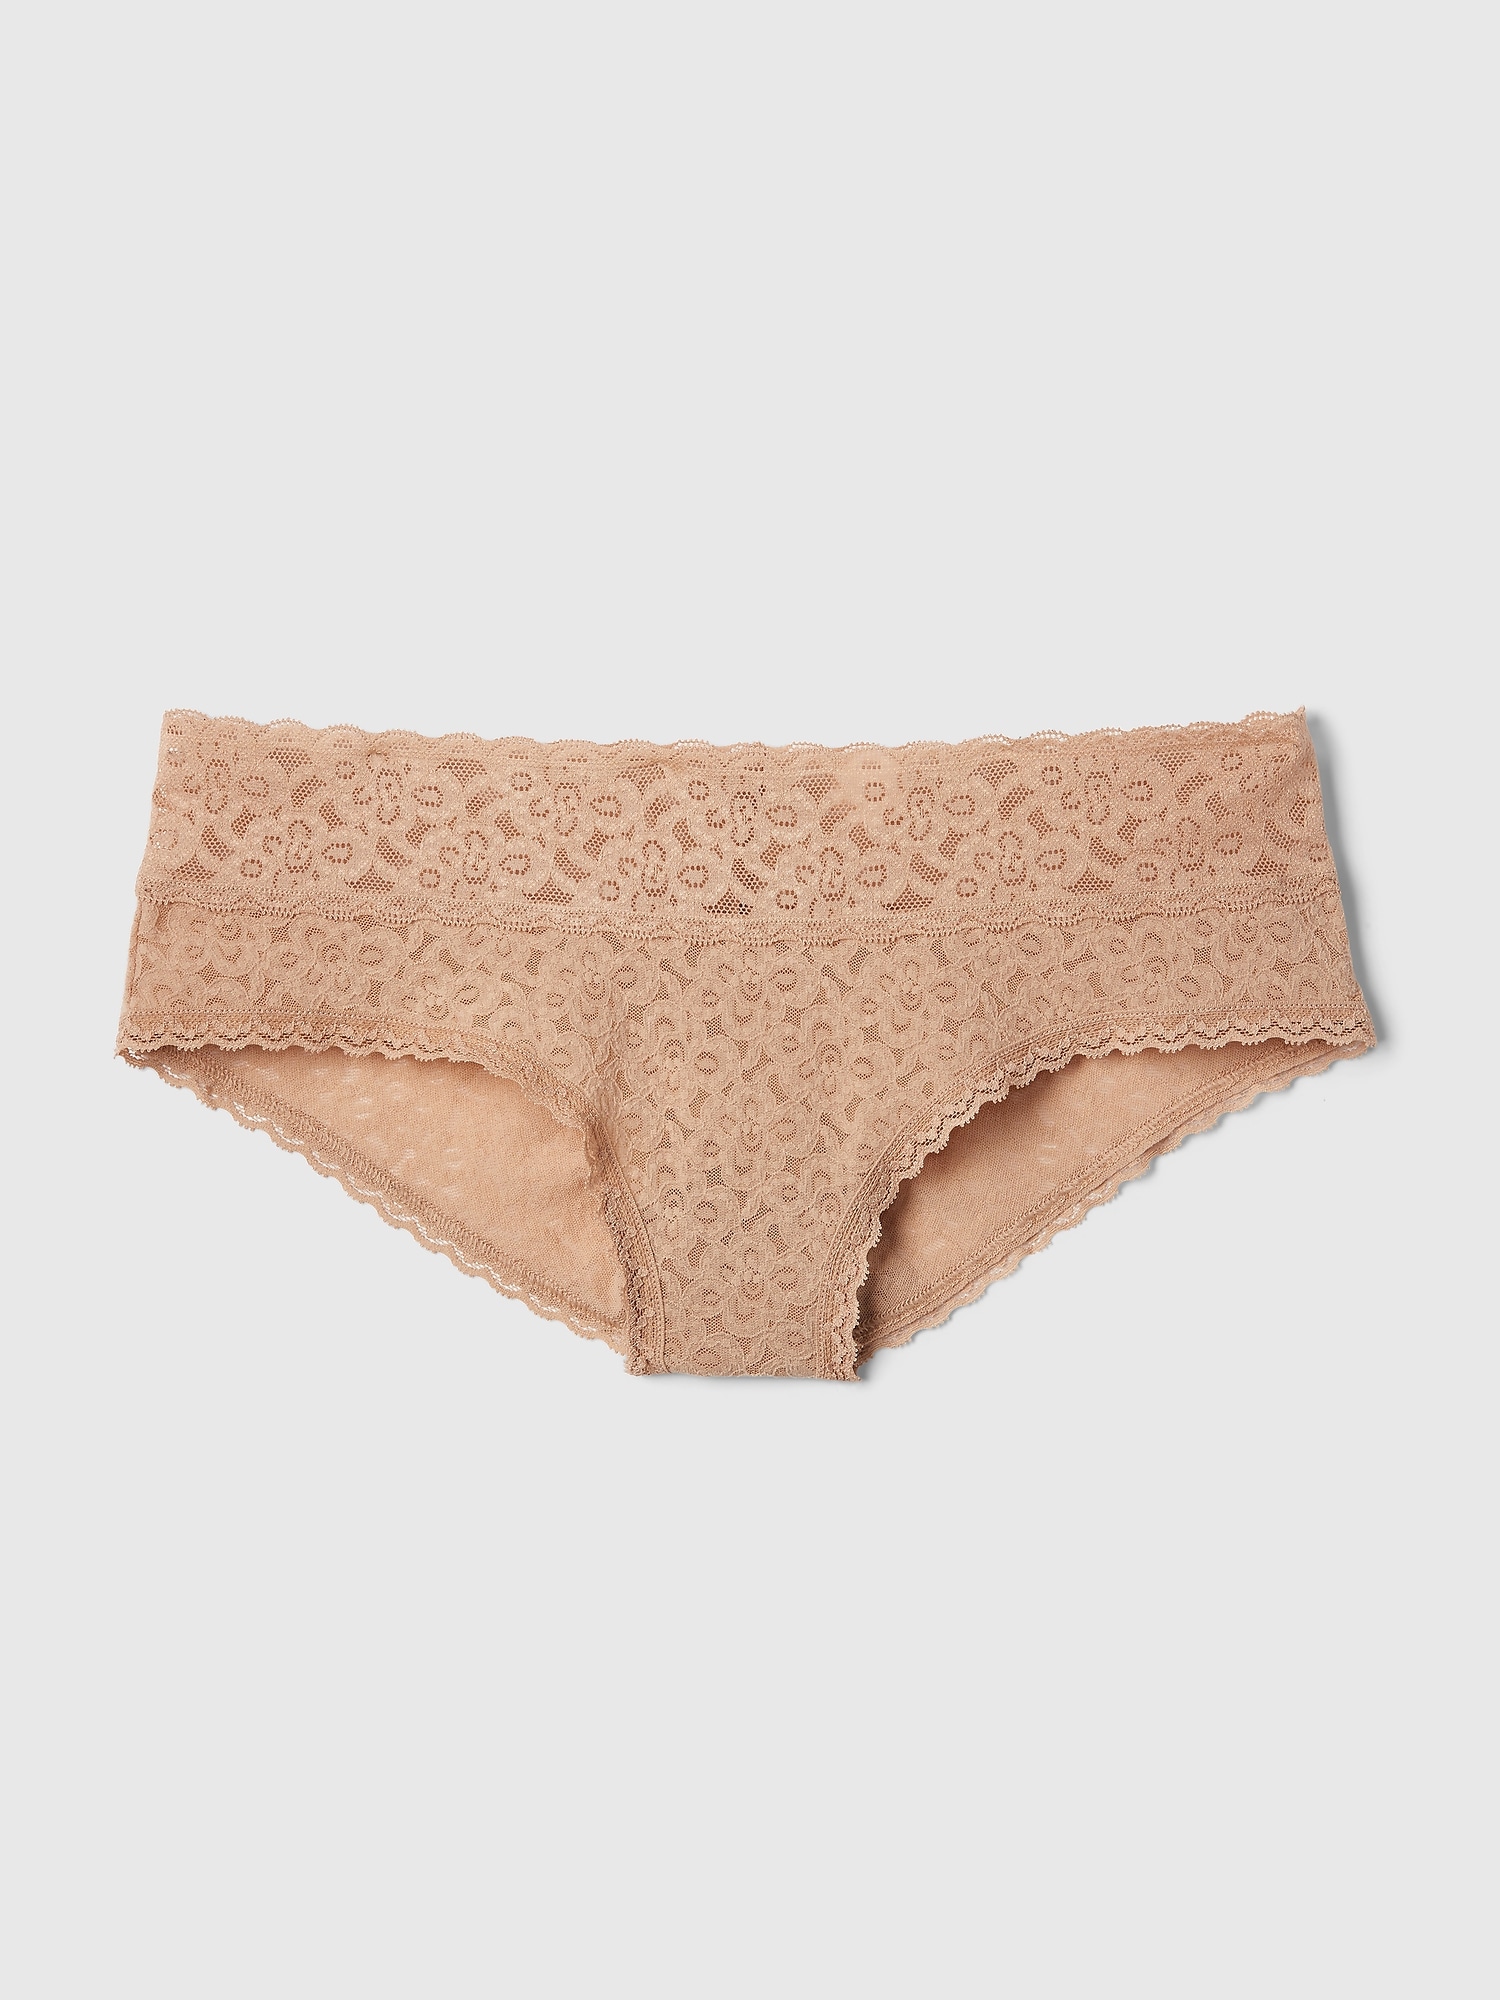 Buy TakeTalk 6/10 pack Cheeky Underwear for Women Sexy Lace